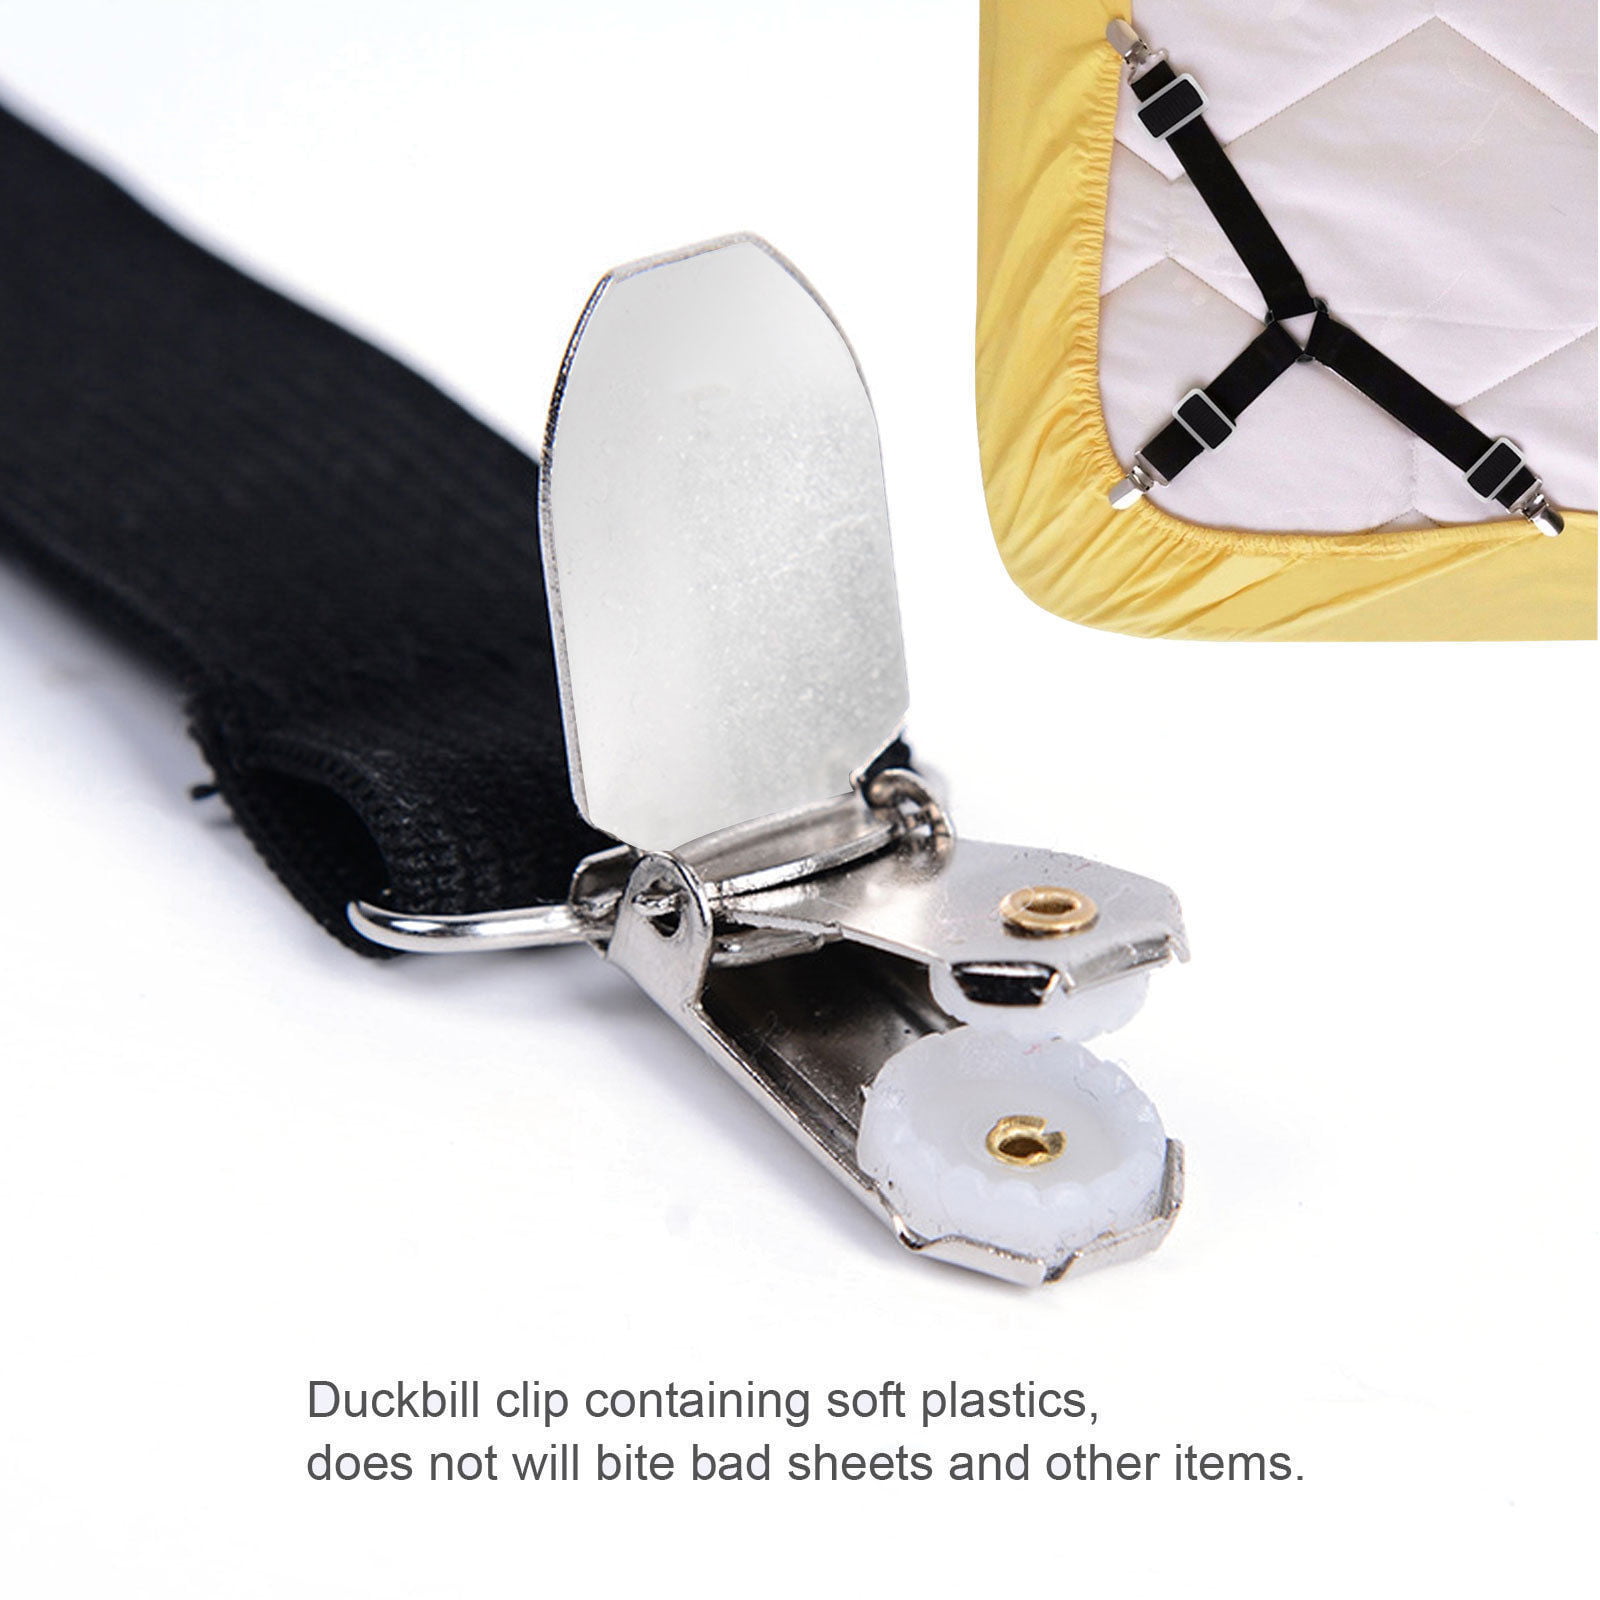 4pcs Triangle Bed Sheet Mattress Holder Fastener Grippers Clips Suspender Straps 